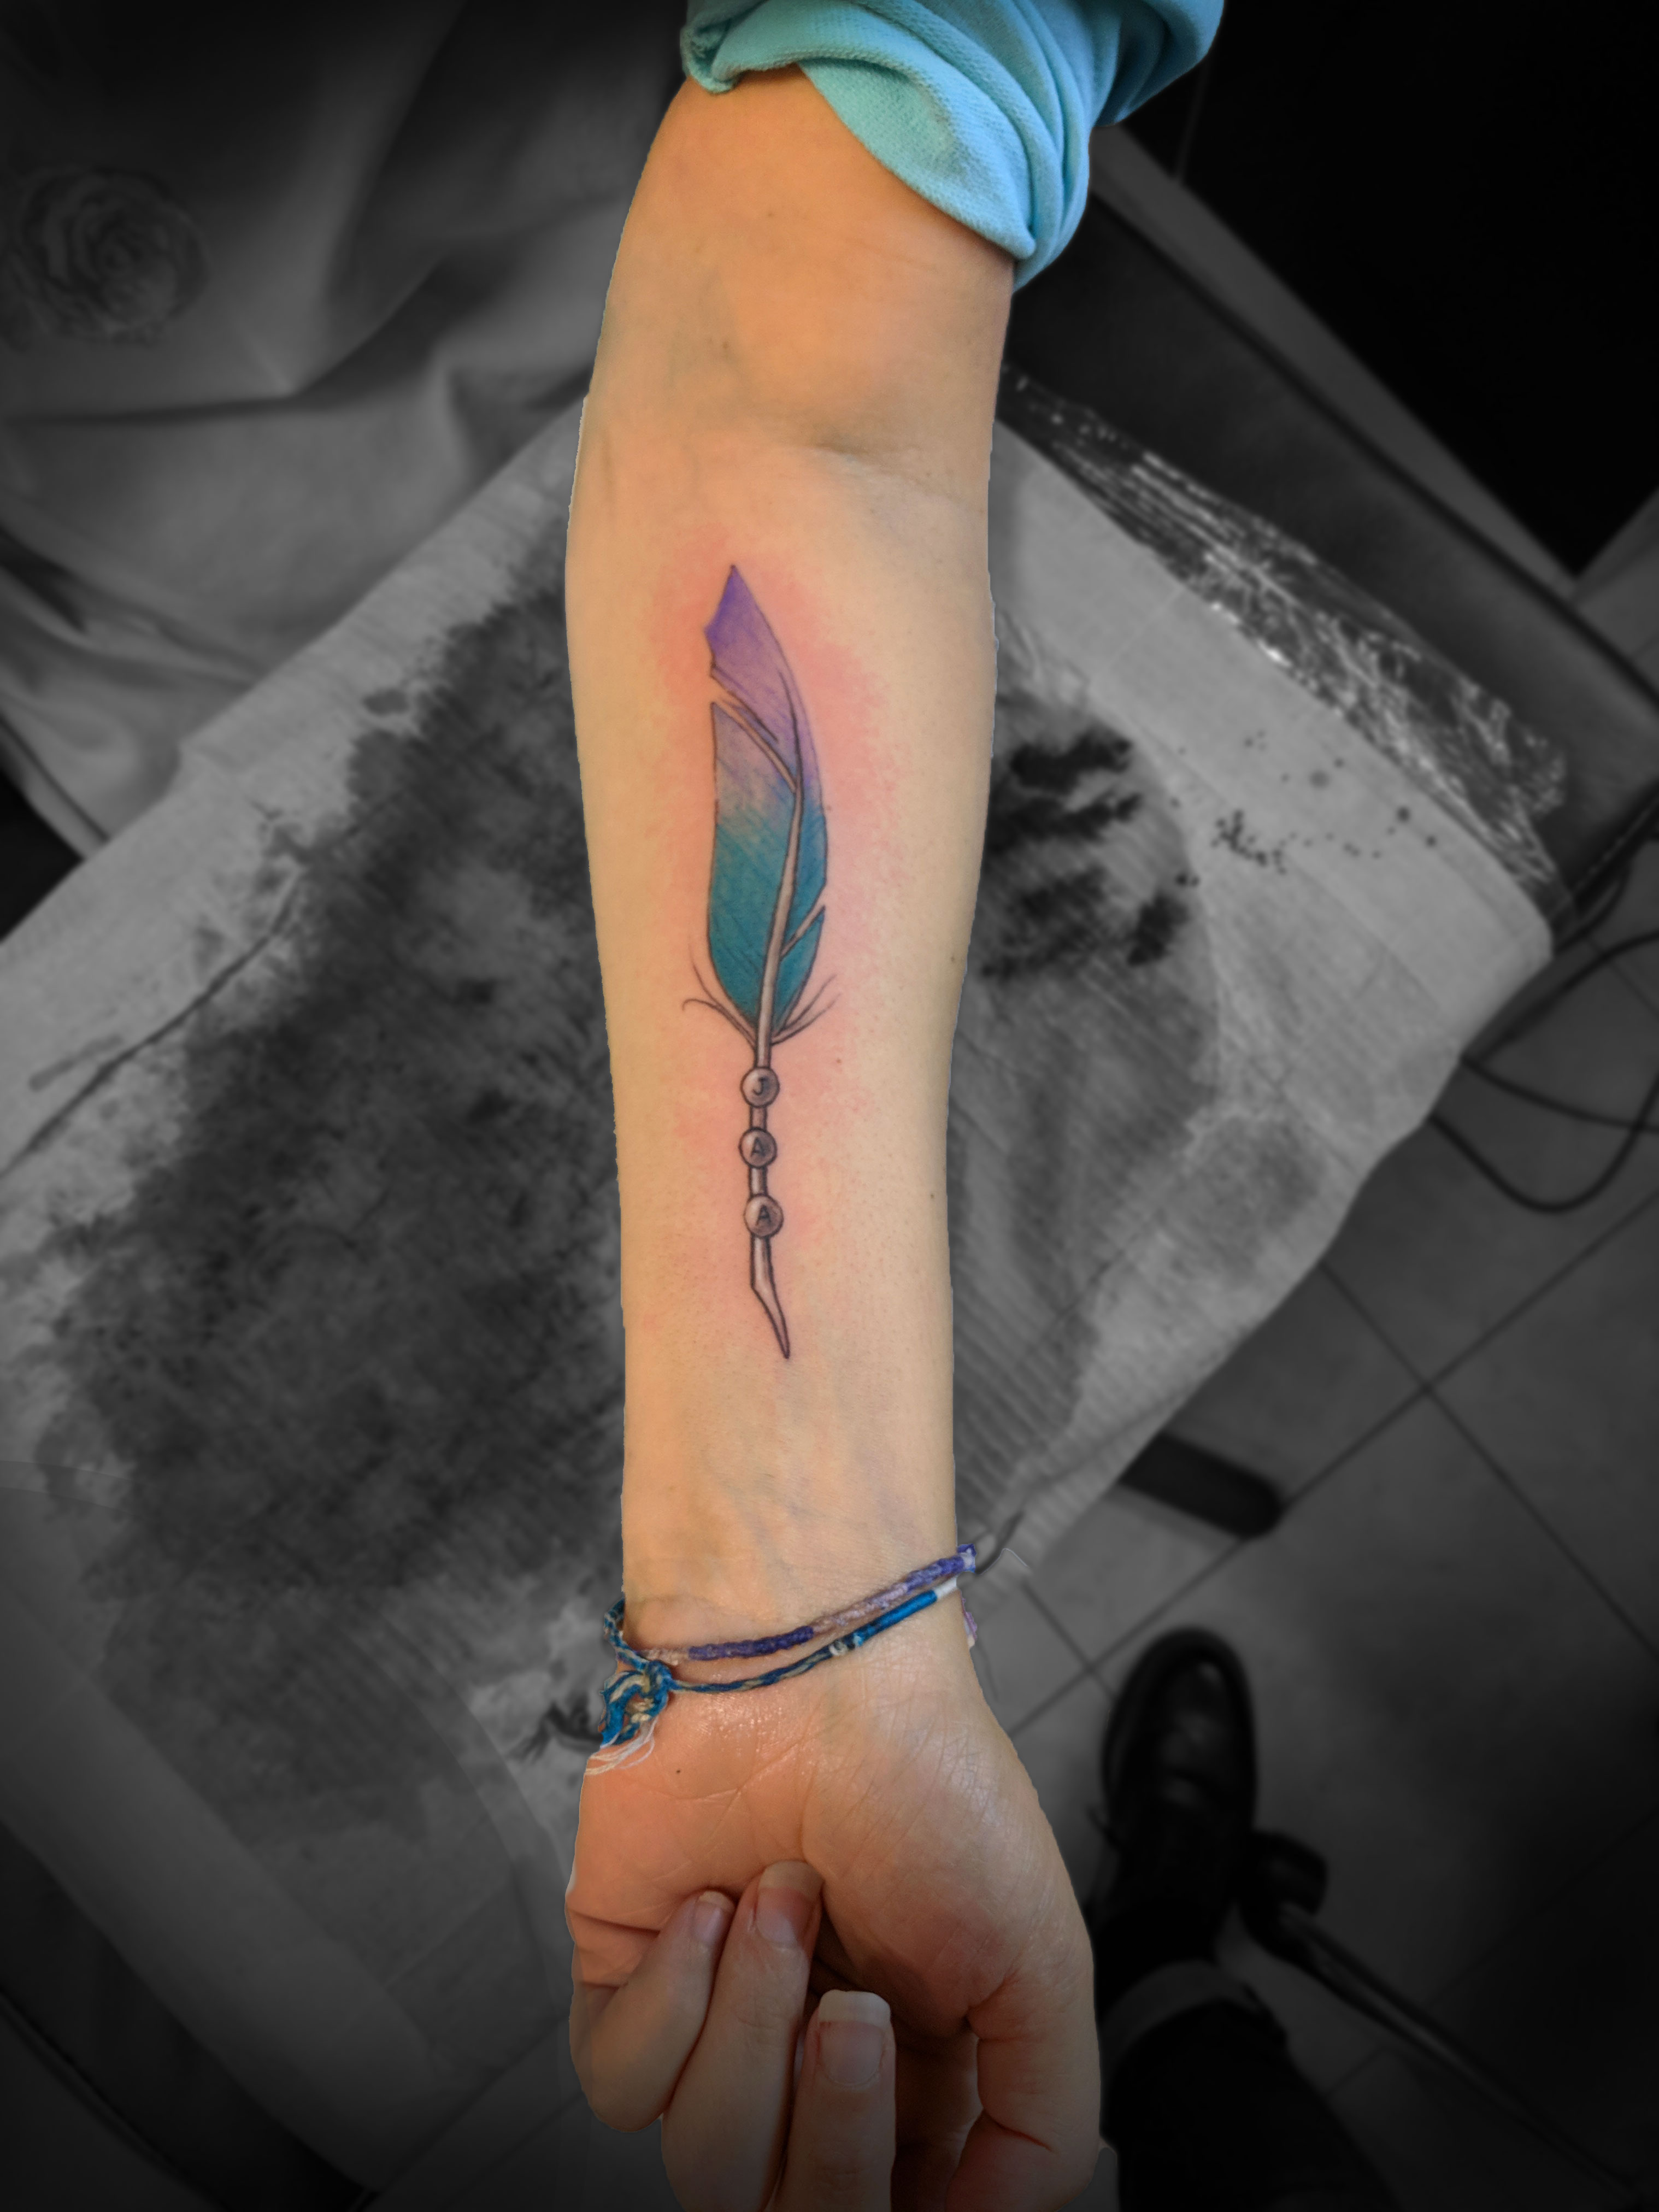 tatouage avant-bras plume couleur feather lyon corbas